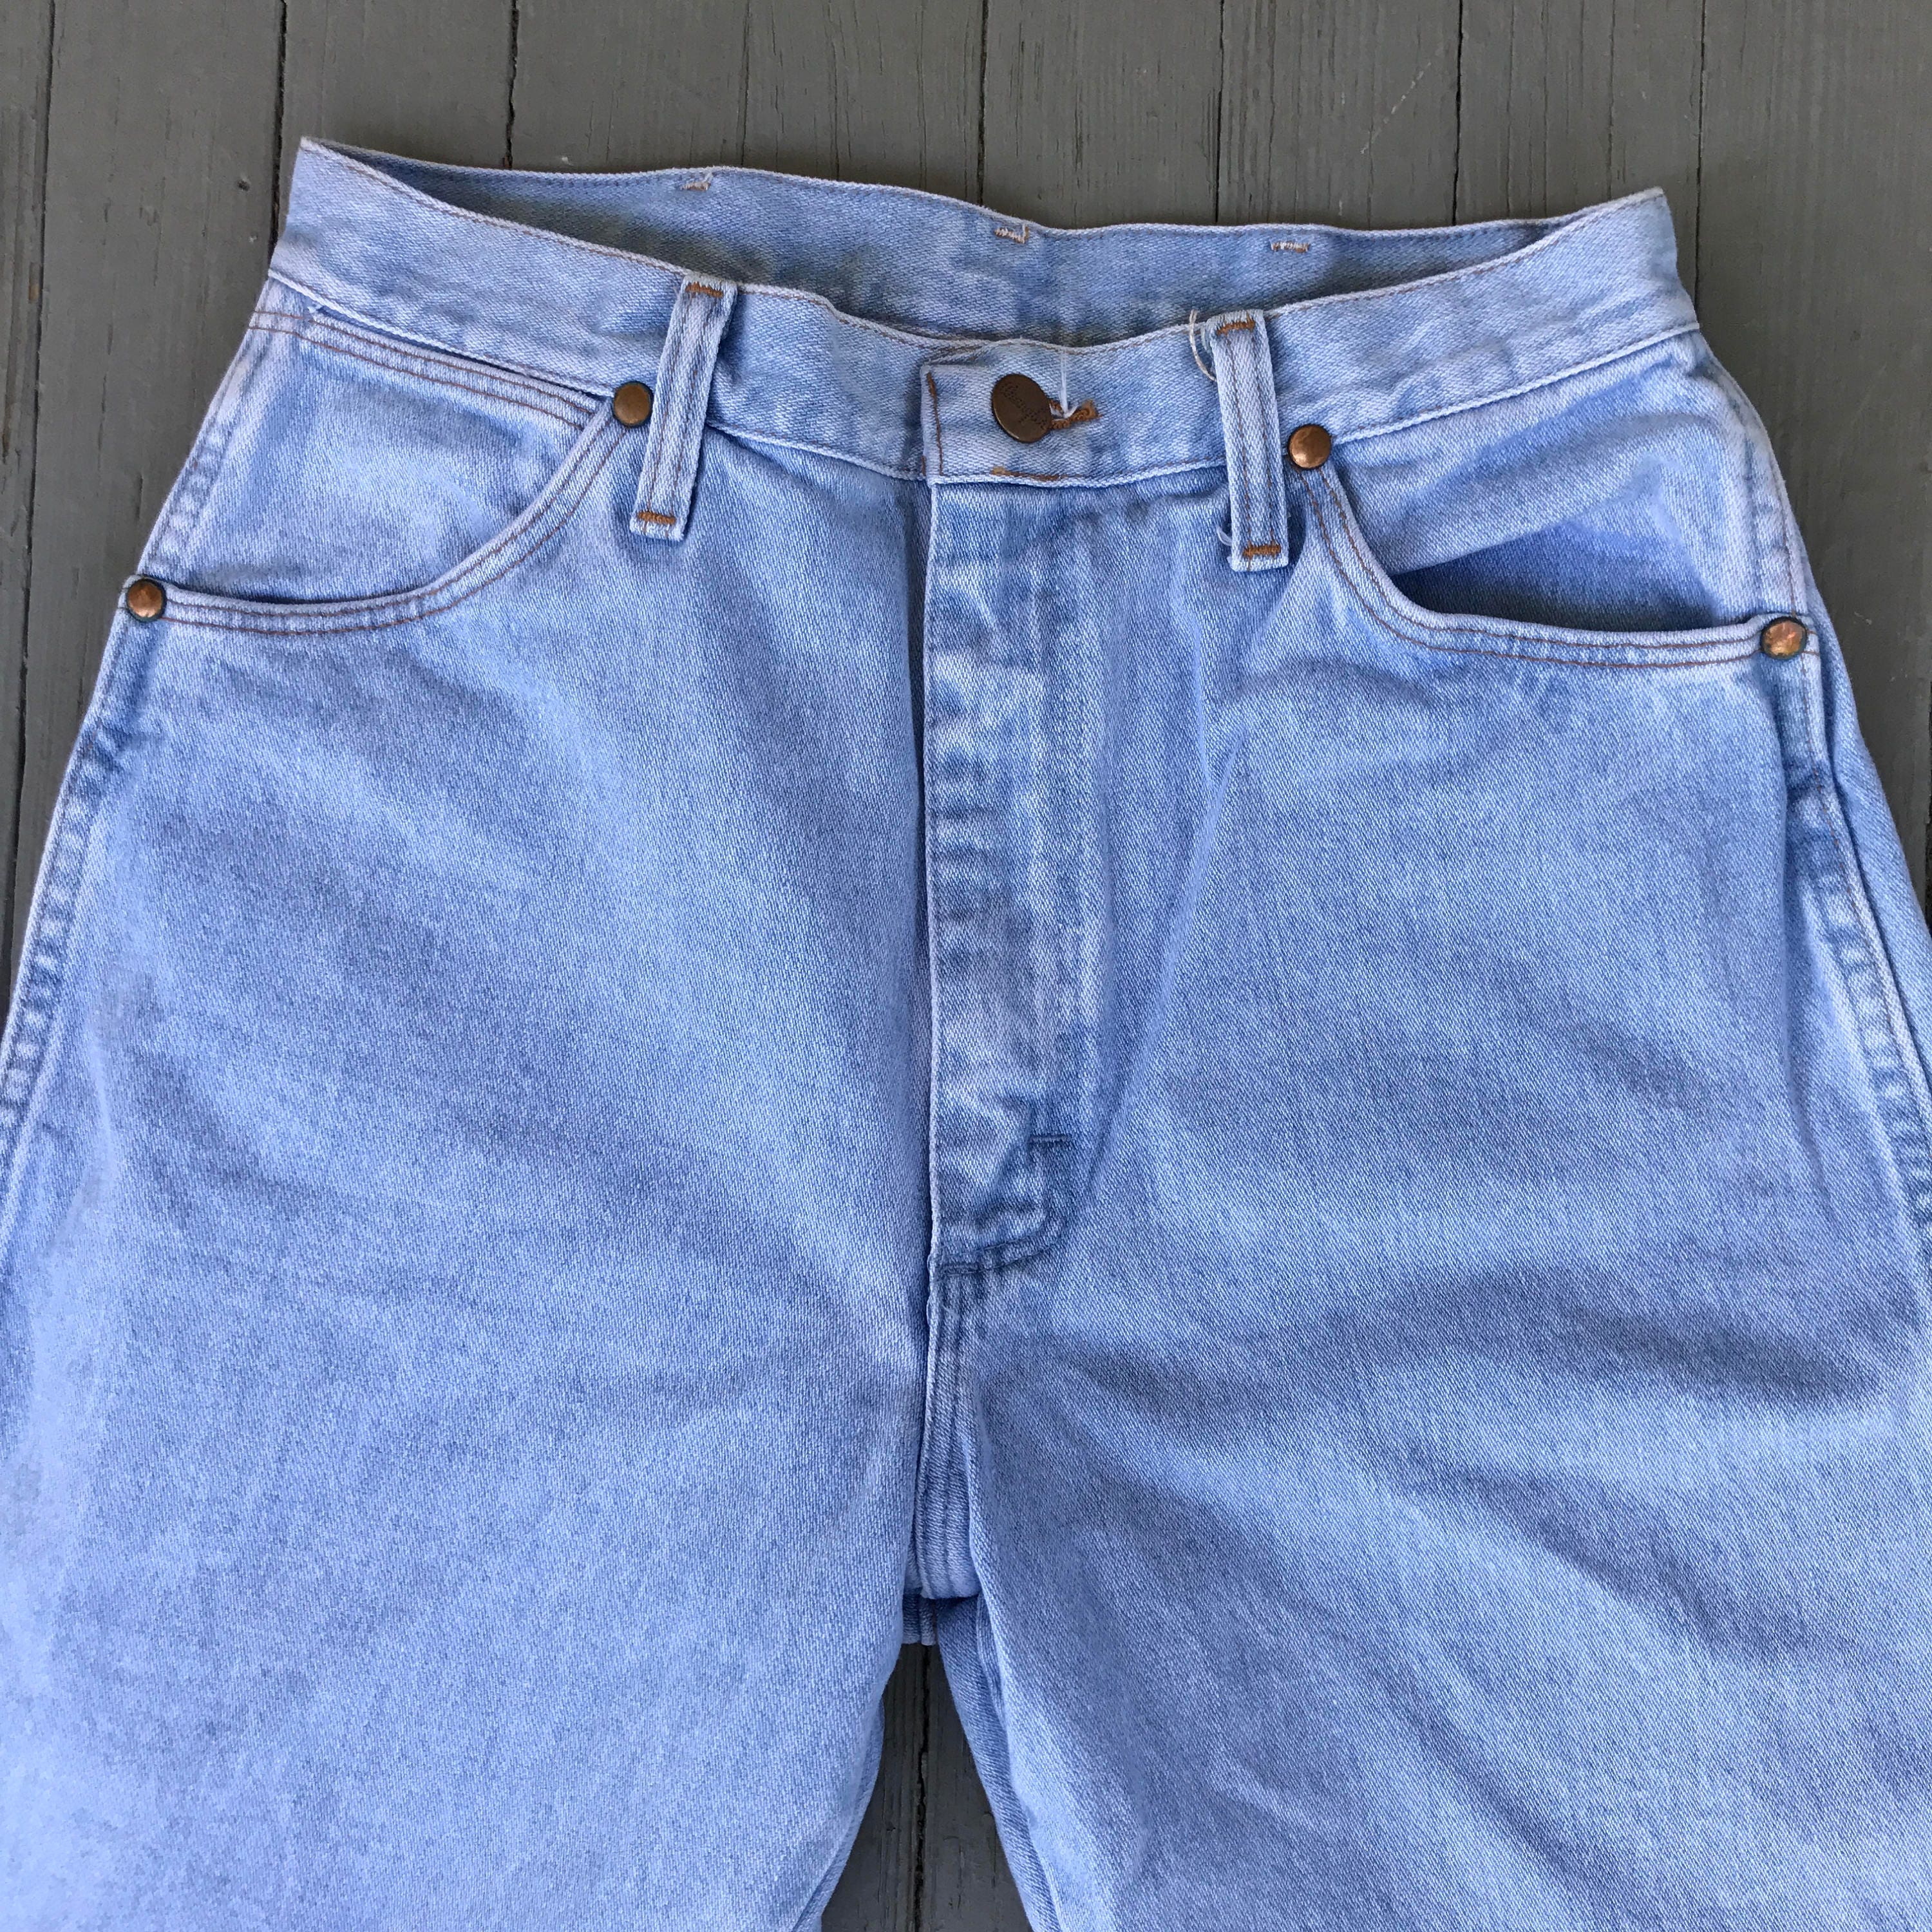 Vintage 70s Wrangler Jeans Faded Blue Jeans Straight Leg Mom Jeans High ...